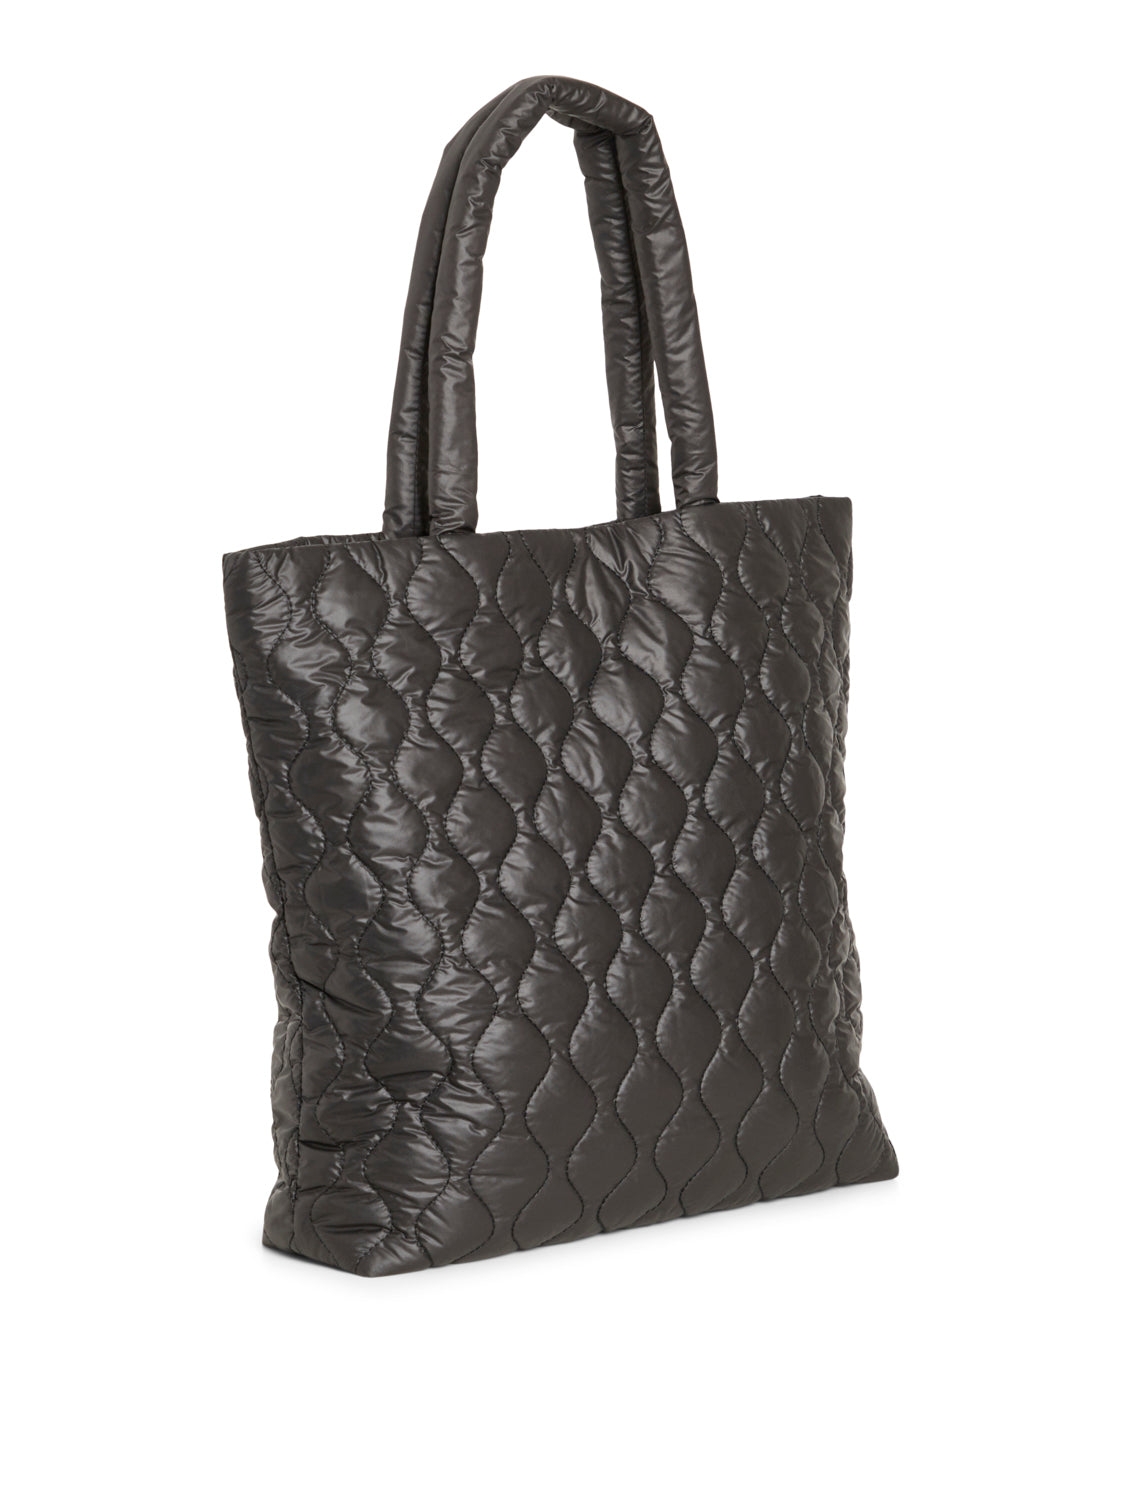 VIFLORIANA Handbag - Black